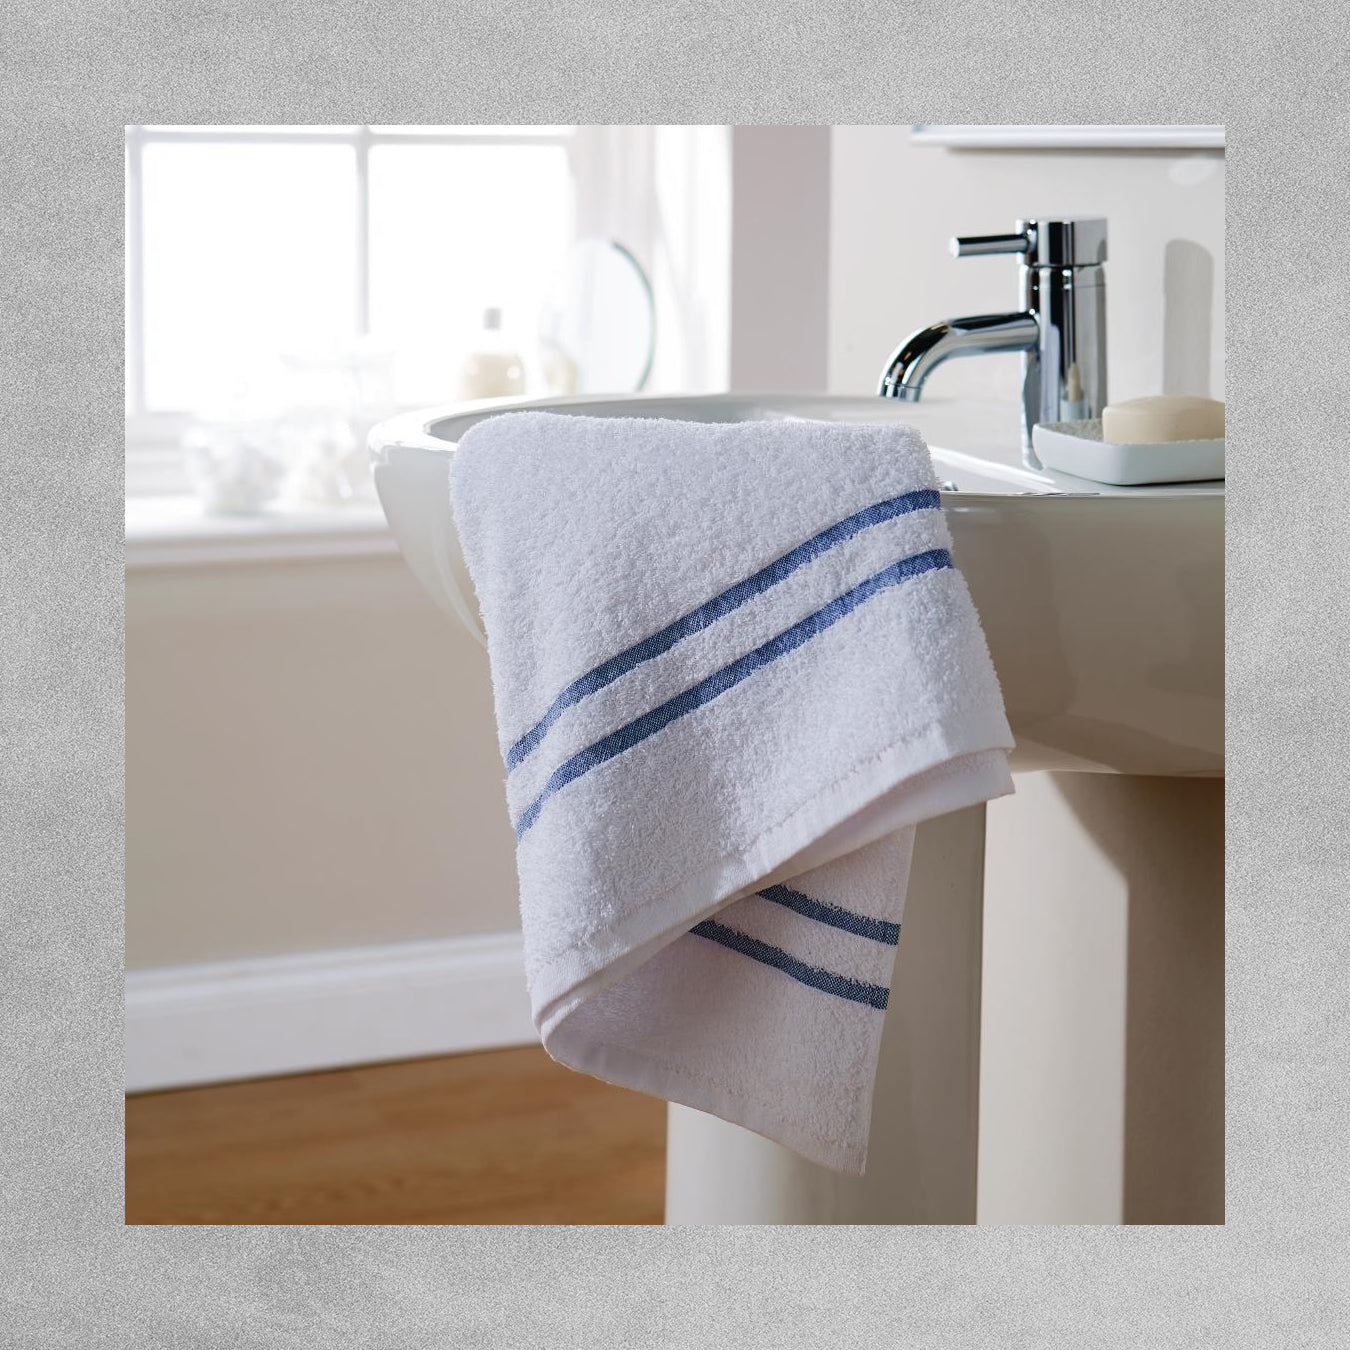 White Bath / Gym Towel with Blue Stripes